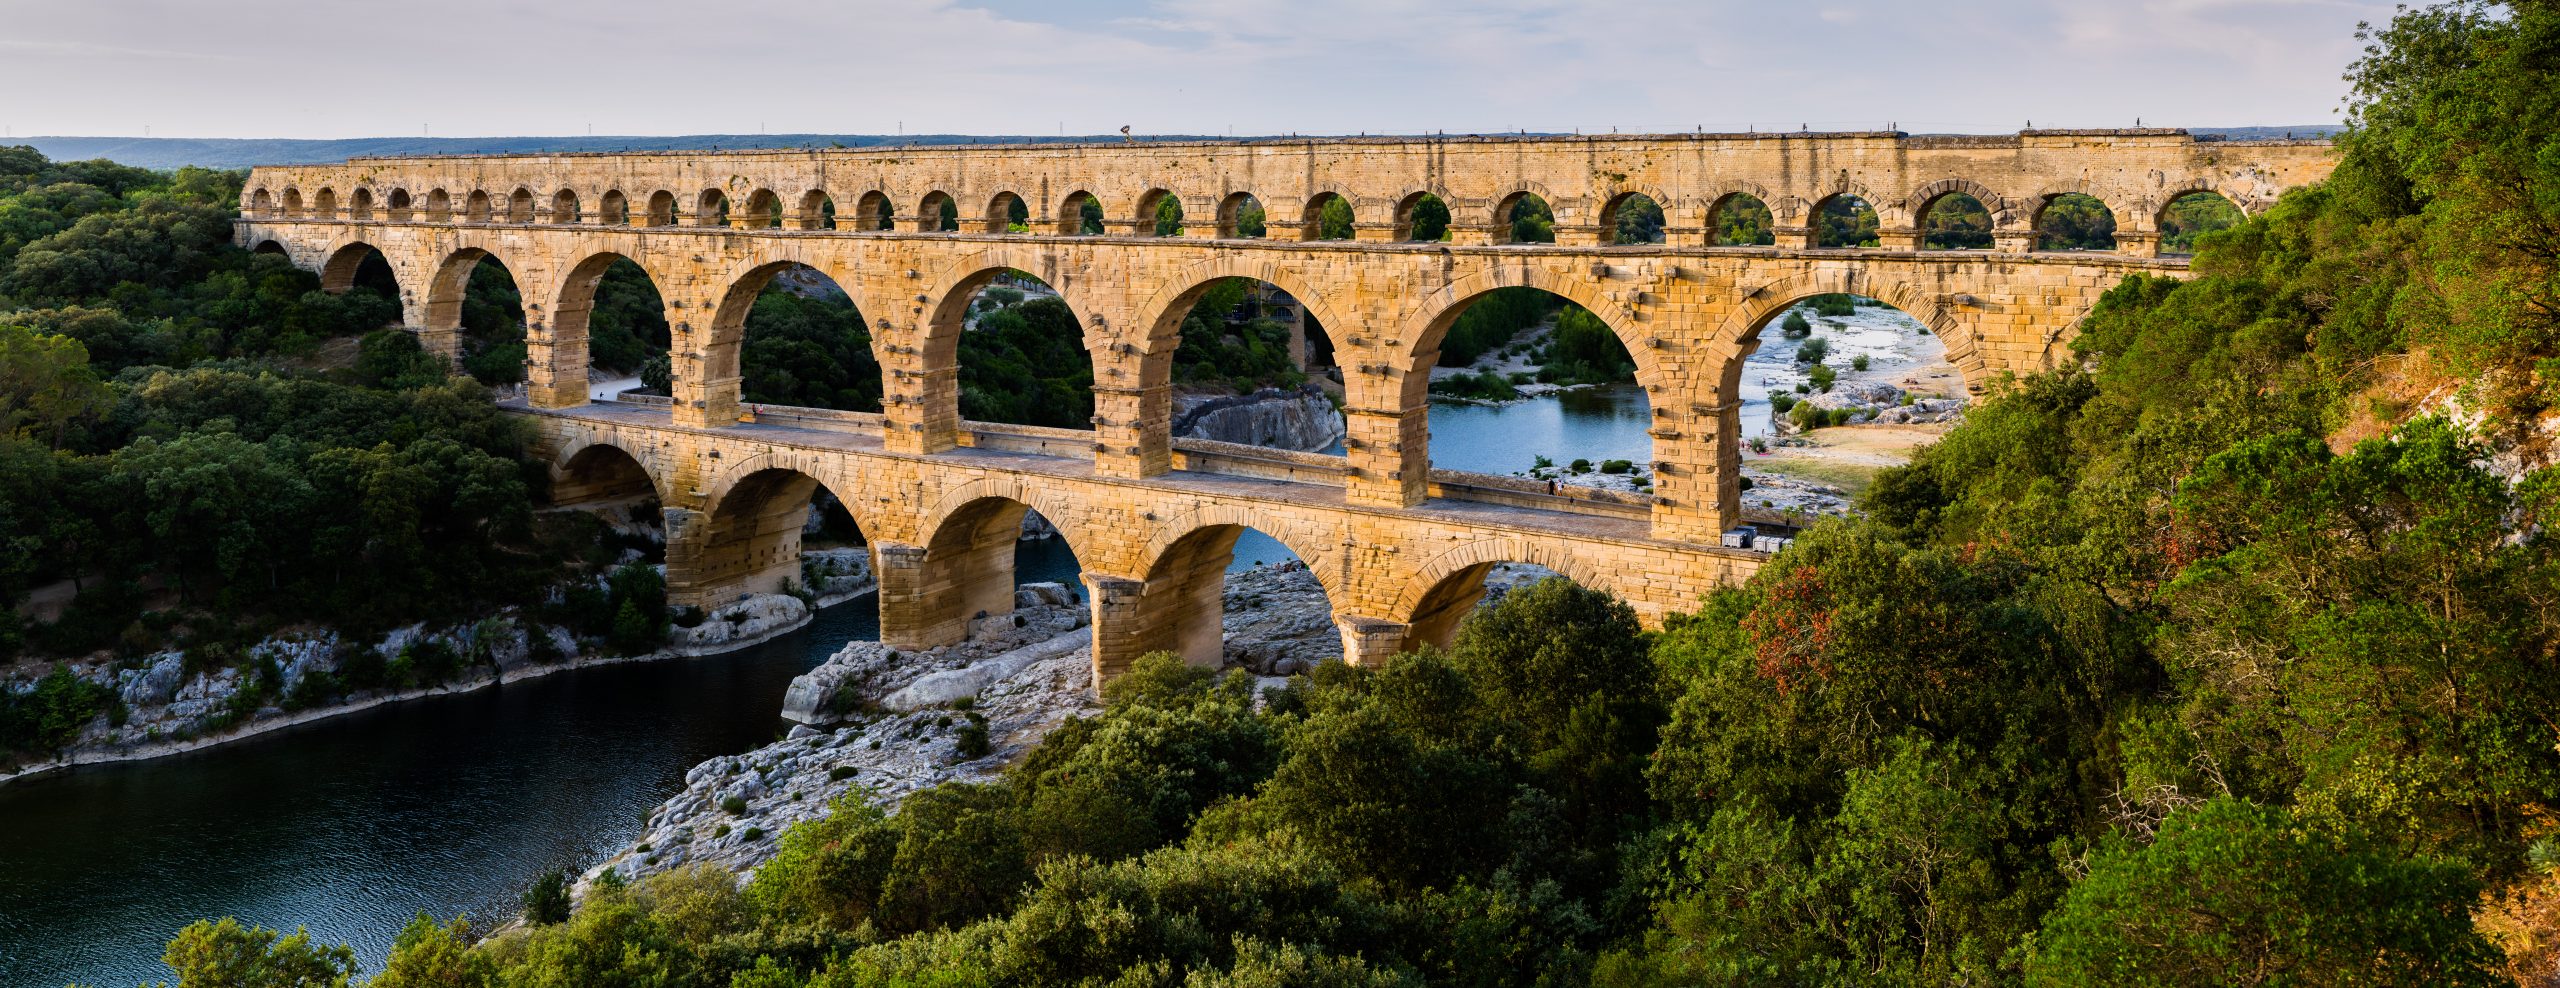 Pont_du_Gard_BLS-scaled-1.jpeg